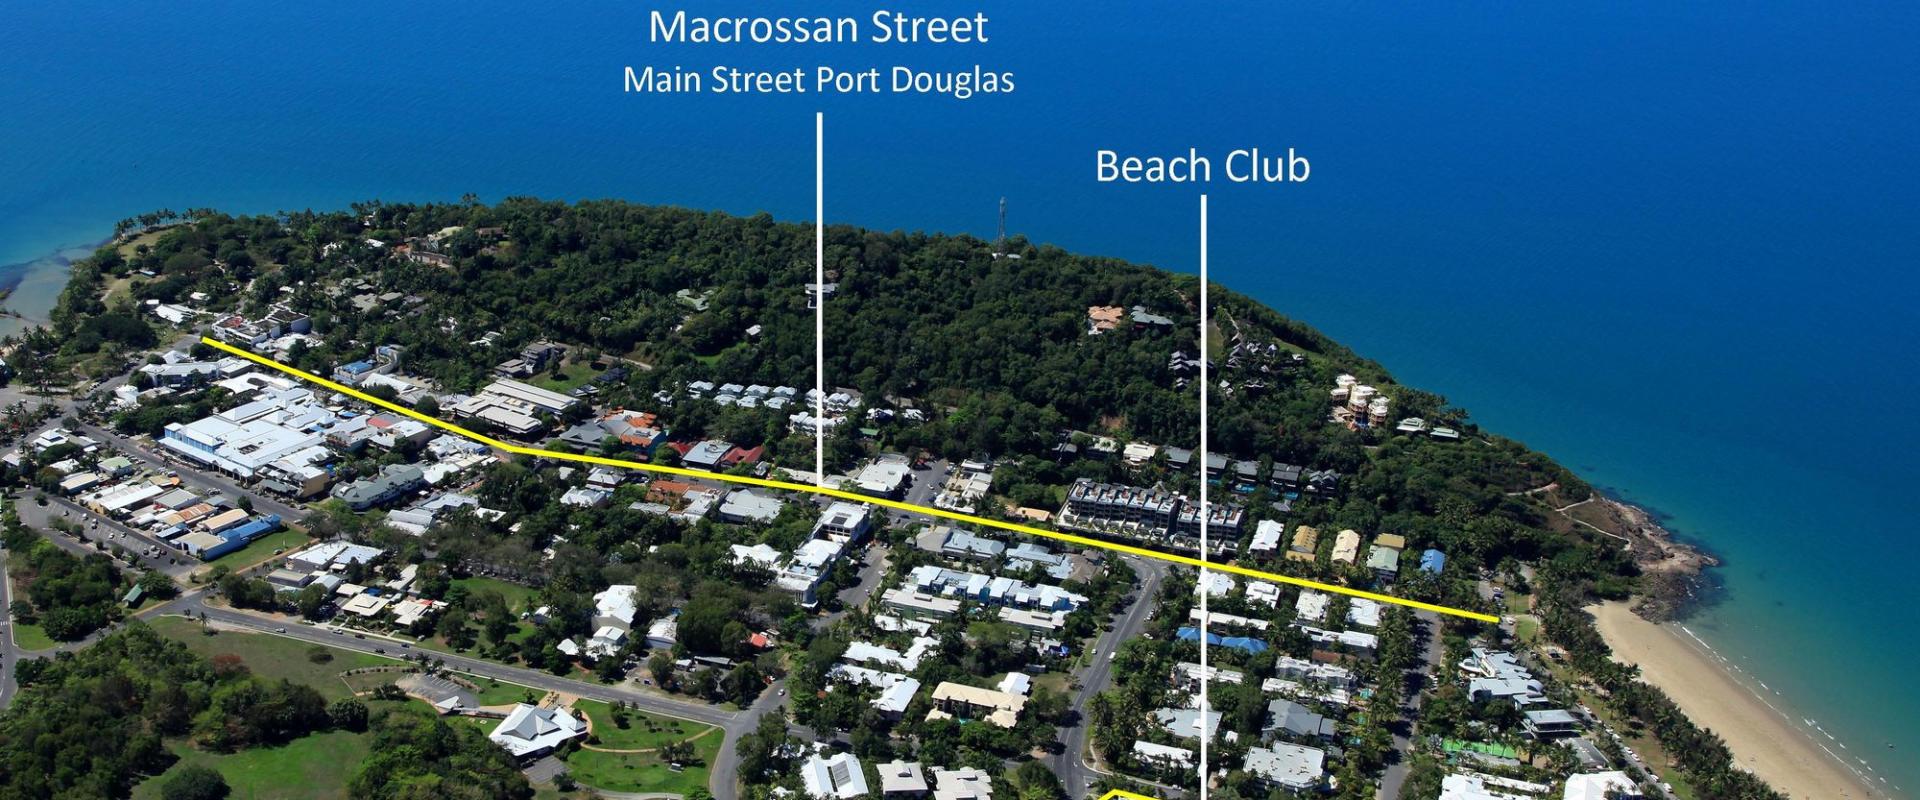 Beach Club Port Douglas SOLD by Tony McGrath Real Estate